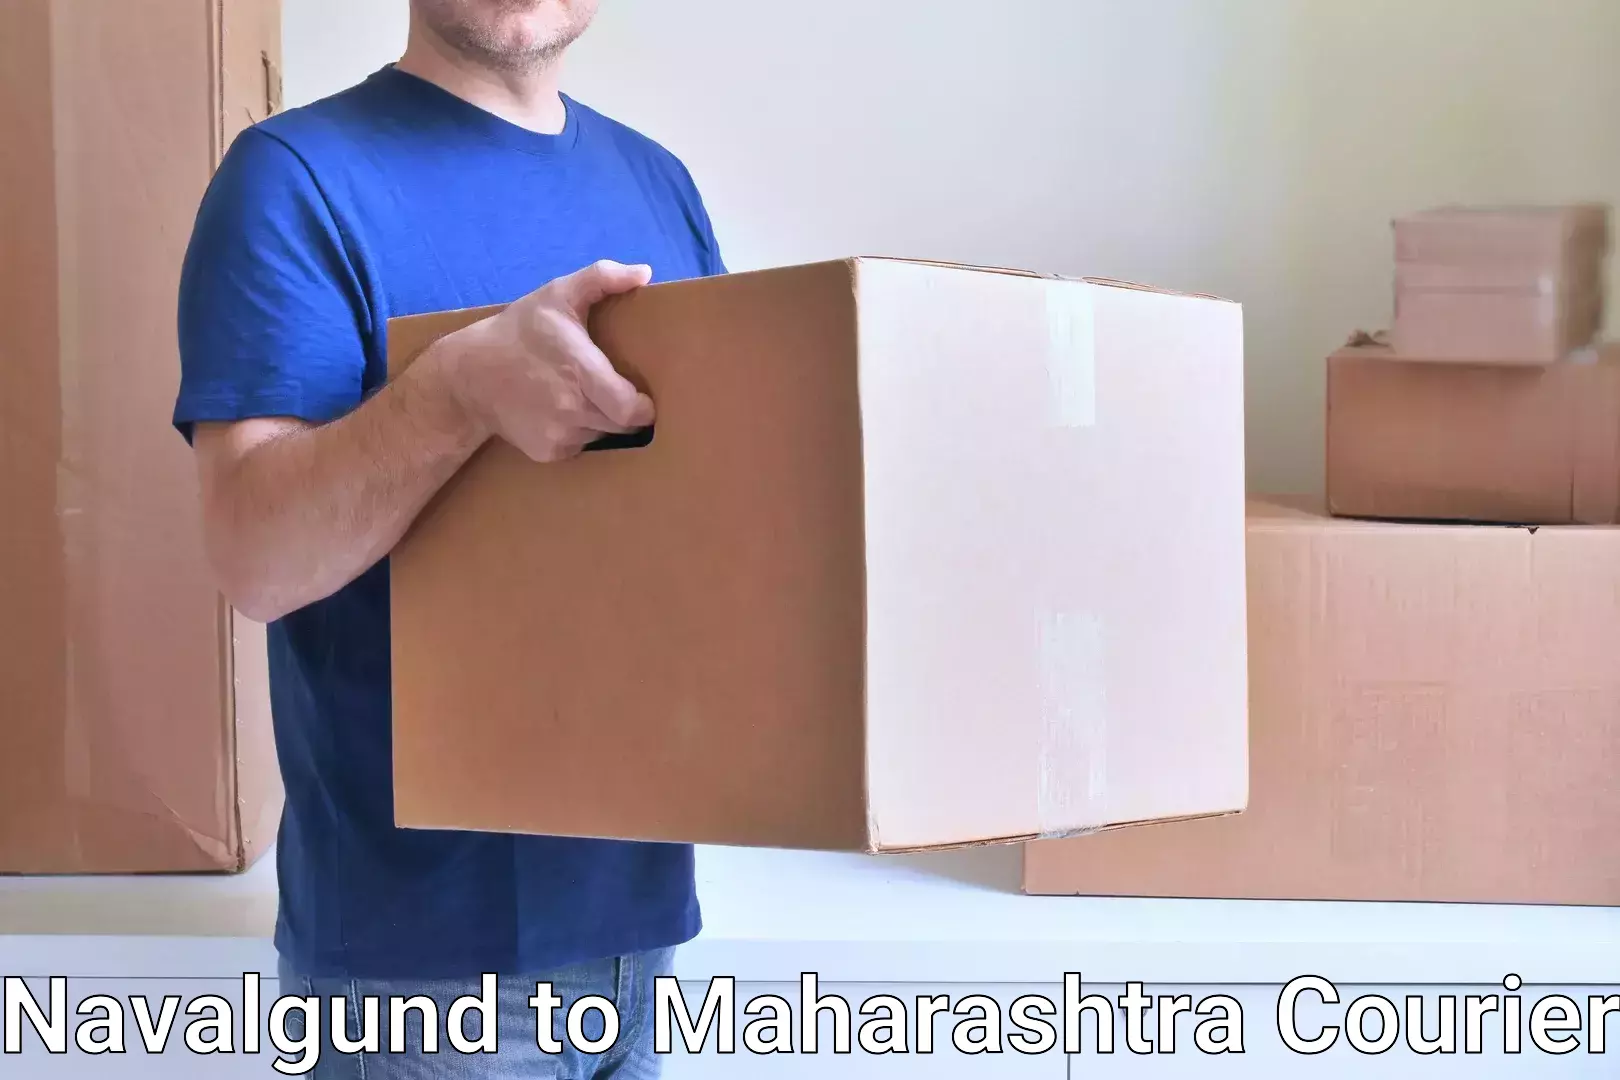 Modern courier technology Navalgund to Maharashtra